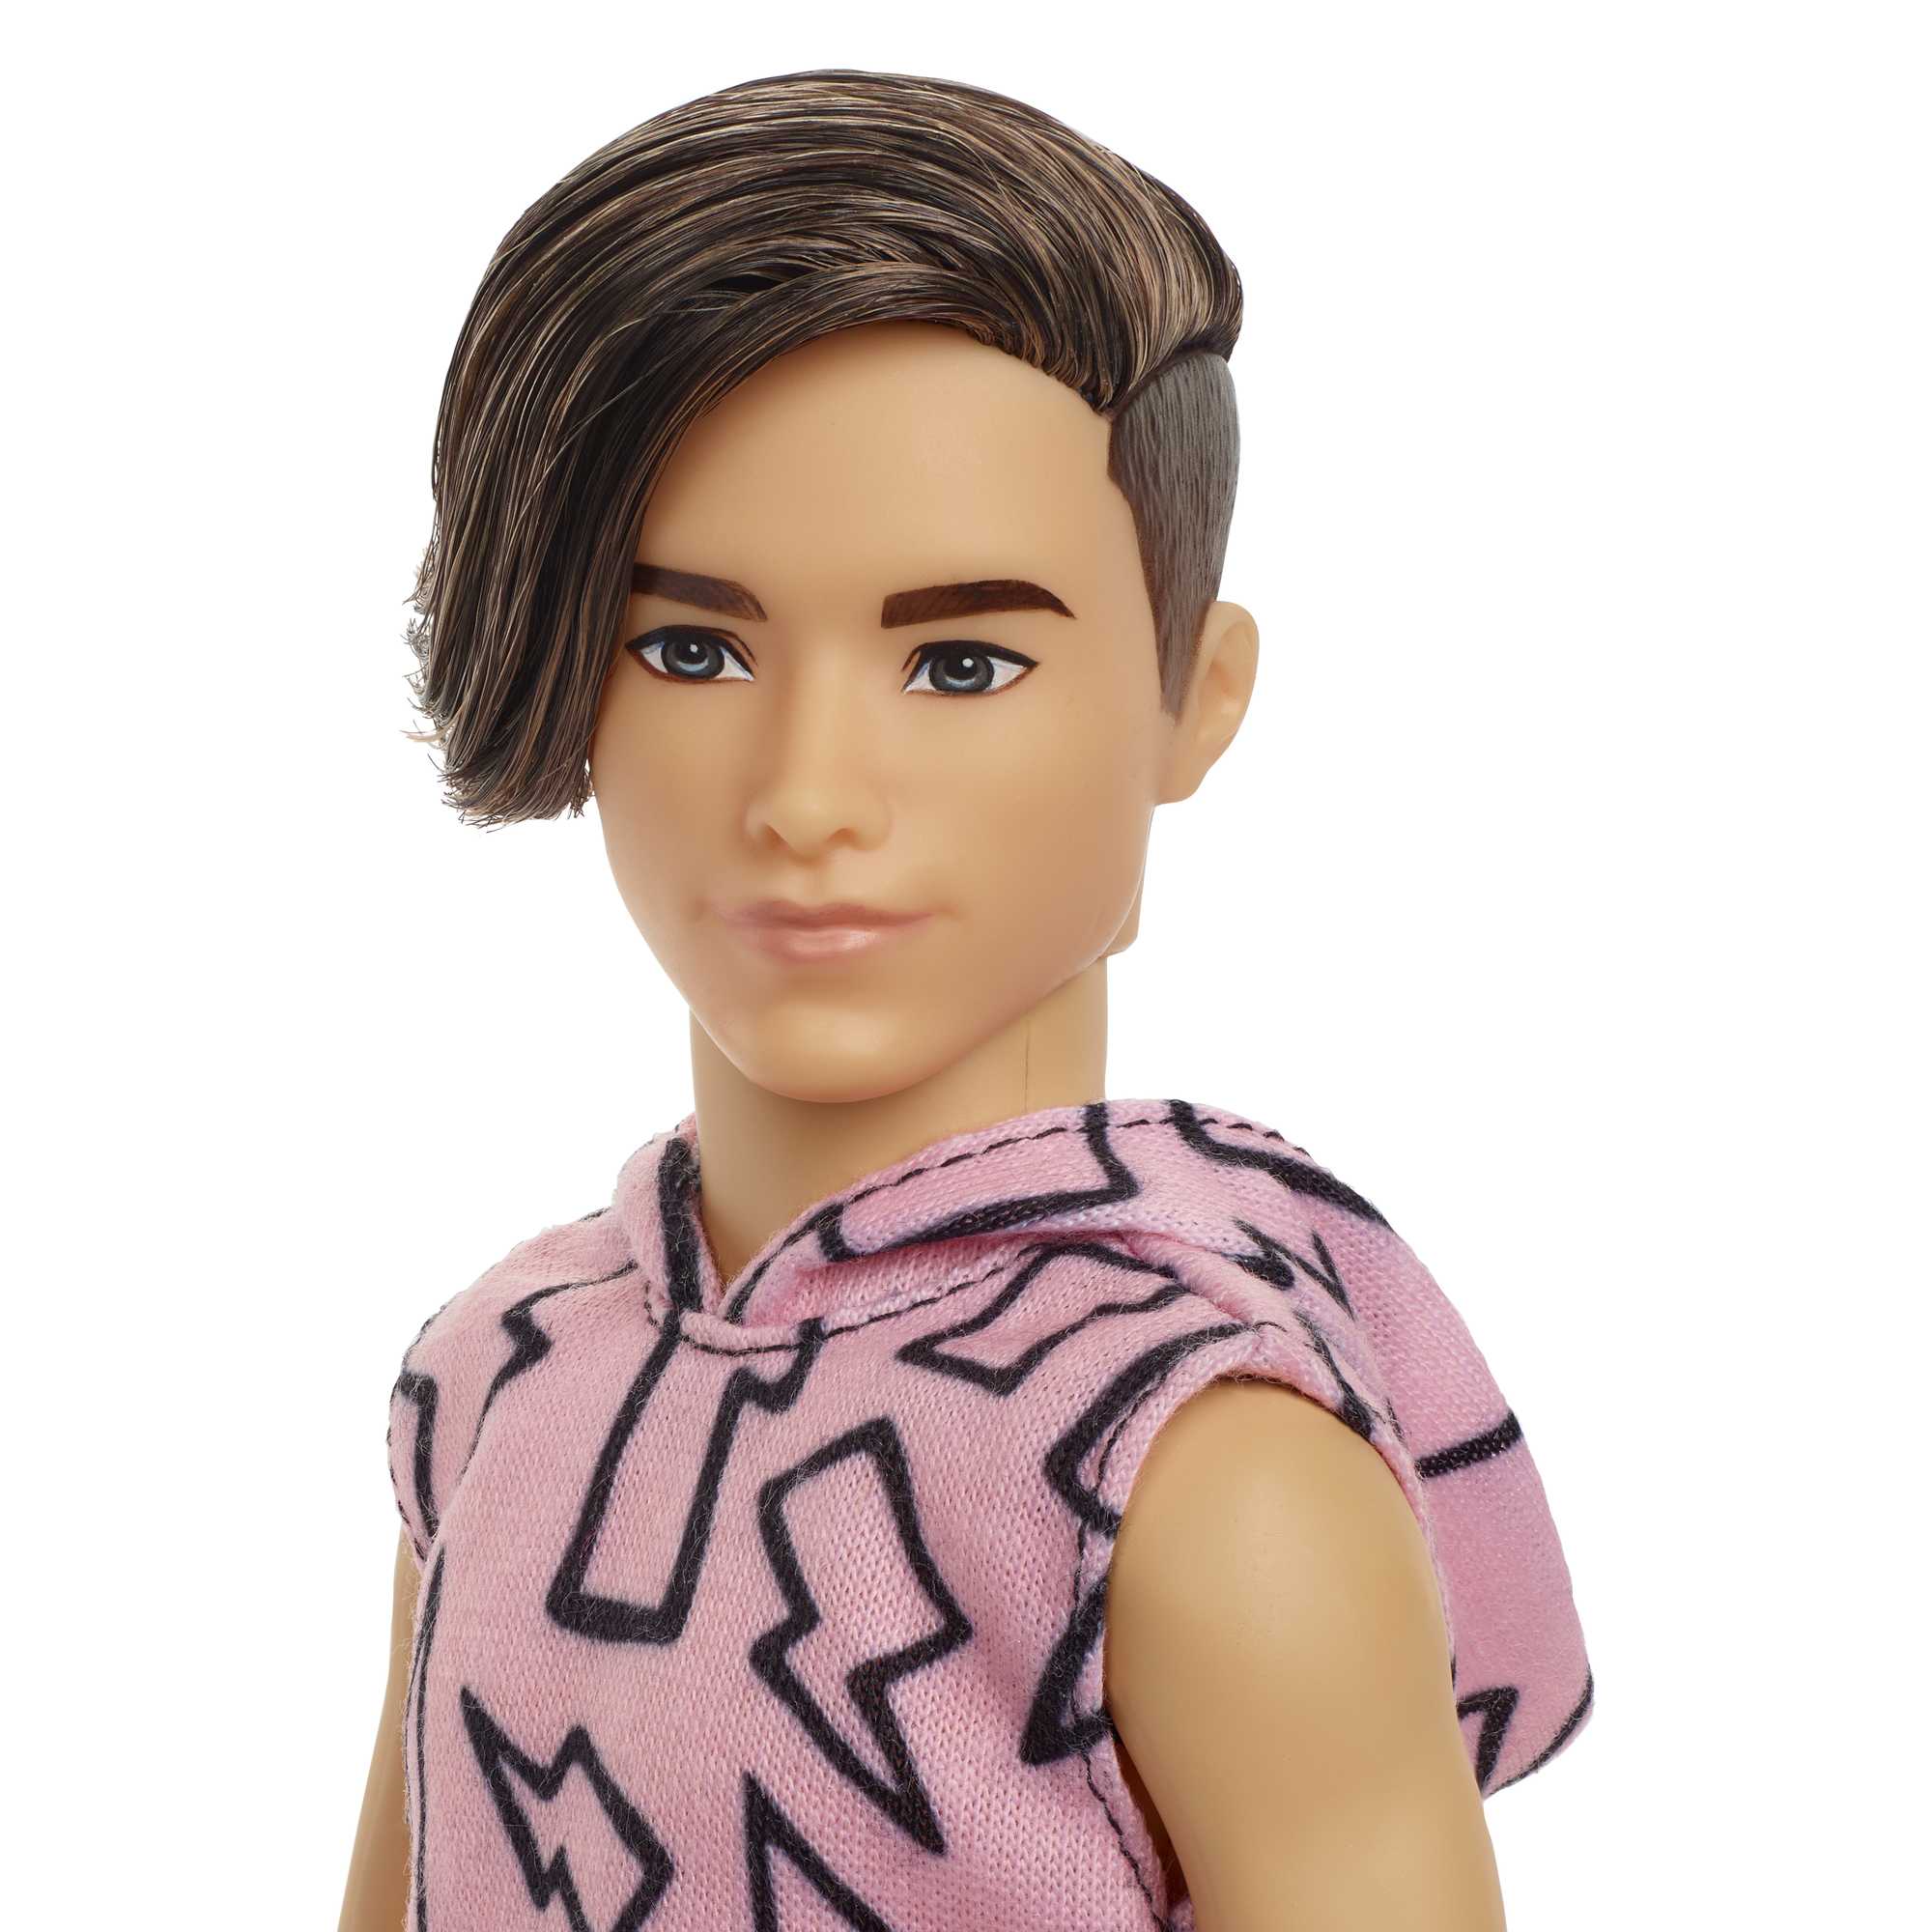 accu Wonder Incarijk Barbie Fashionistas Doll #193 | Mattel